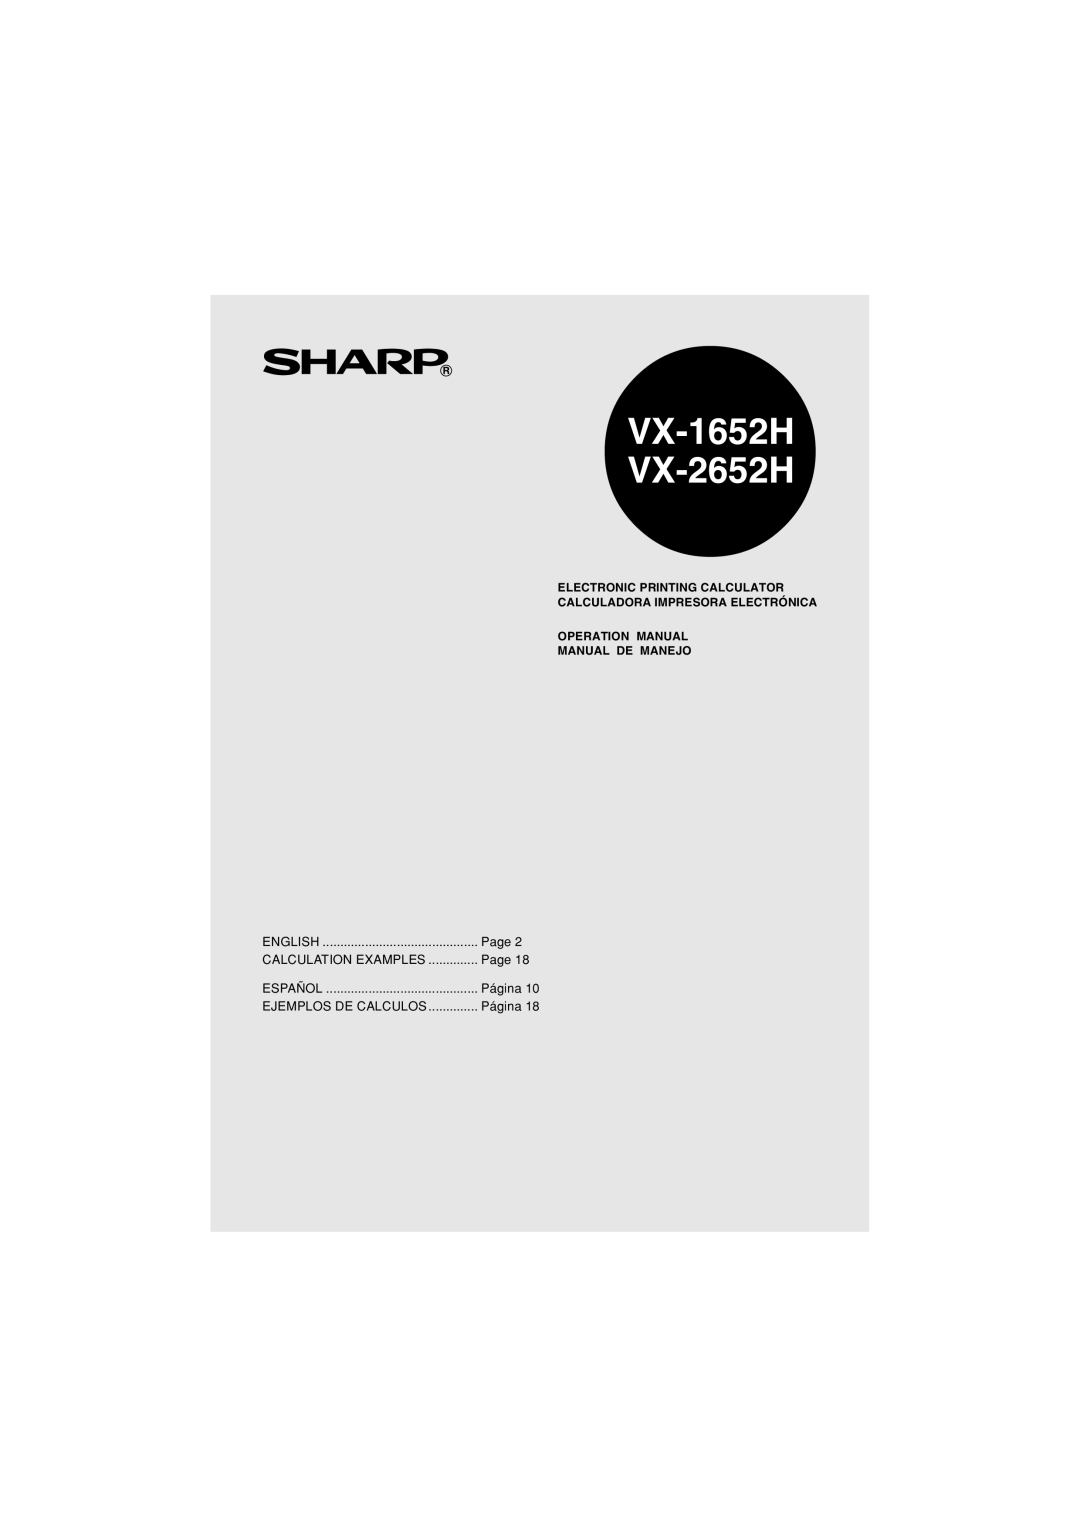 Sharp operation manual VX-1652H VX-2652H, Electronic Printing Calculator Calculadora Impresora Electrónica, Page 